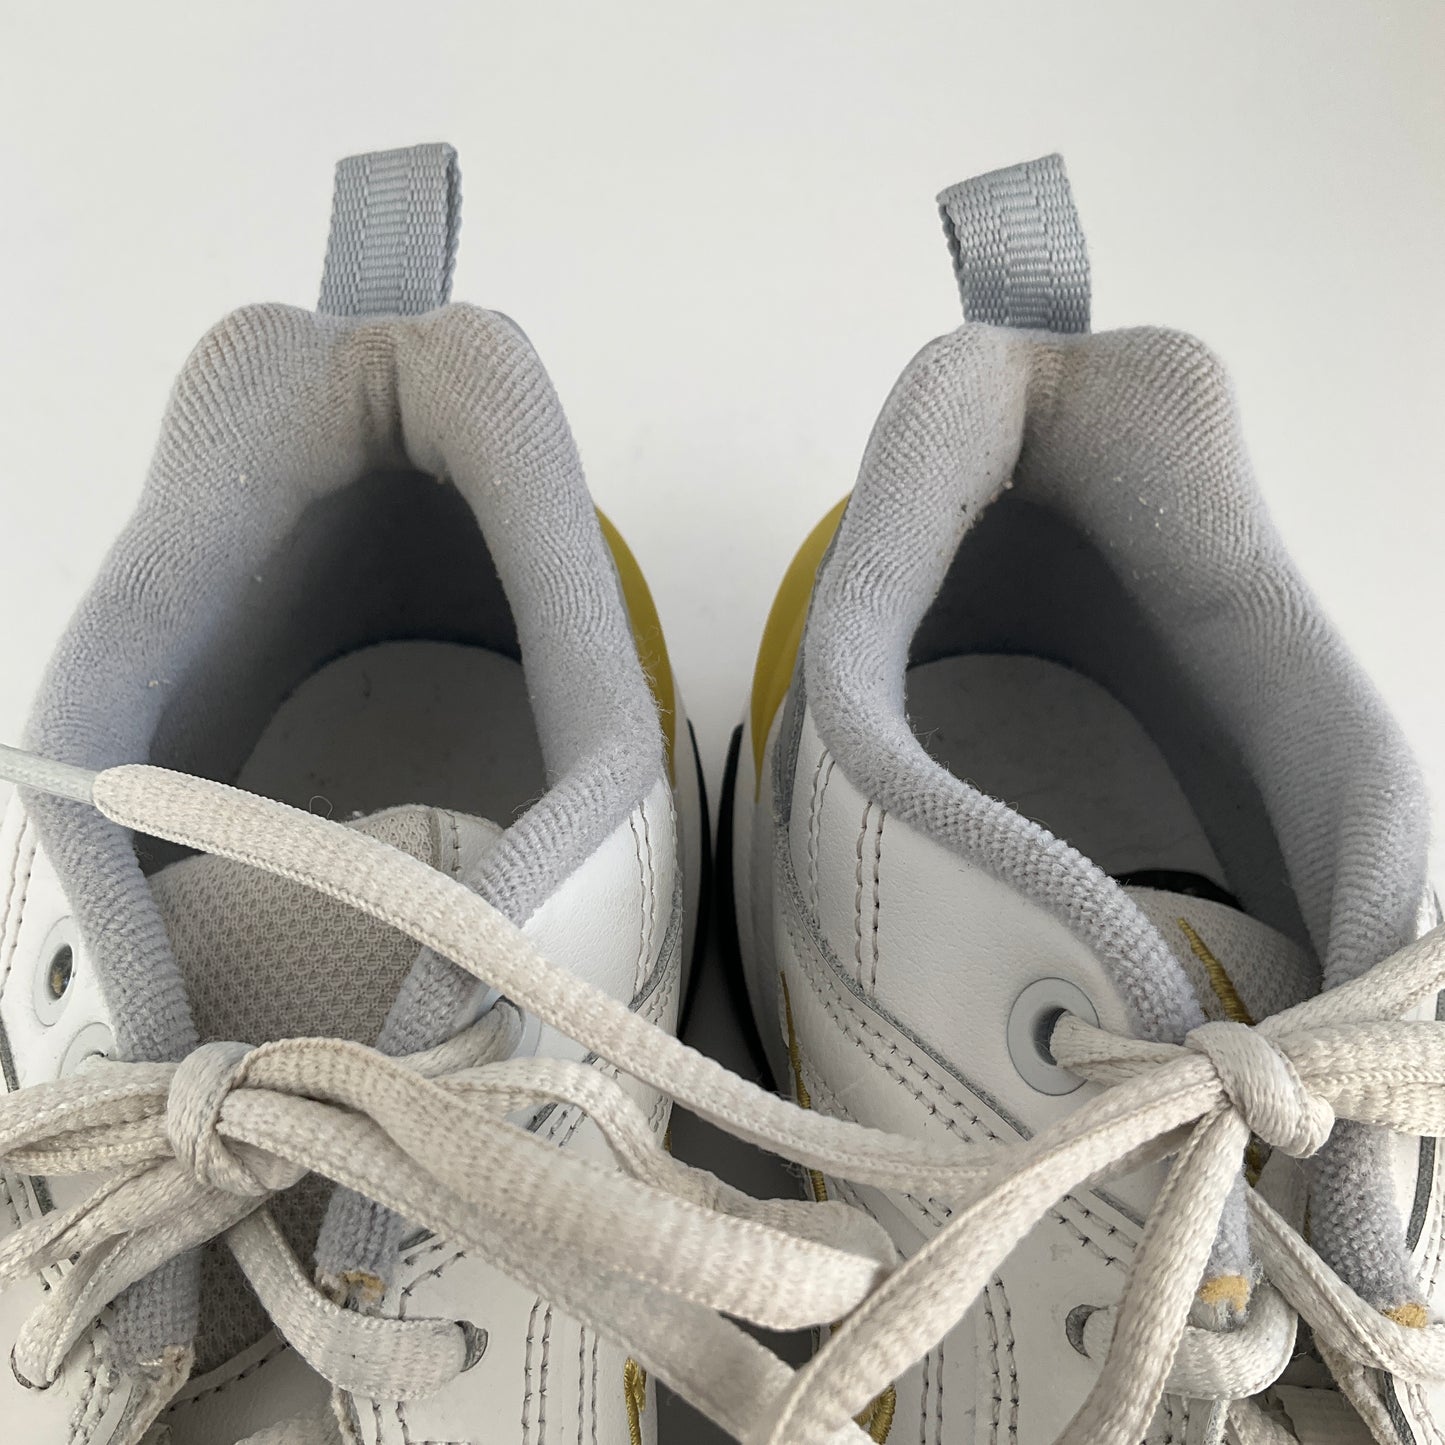 Nike - M2k Tekno Chunky Sneakers - Size 5